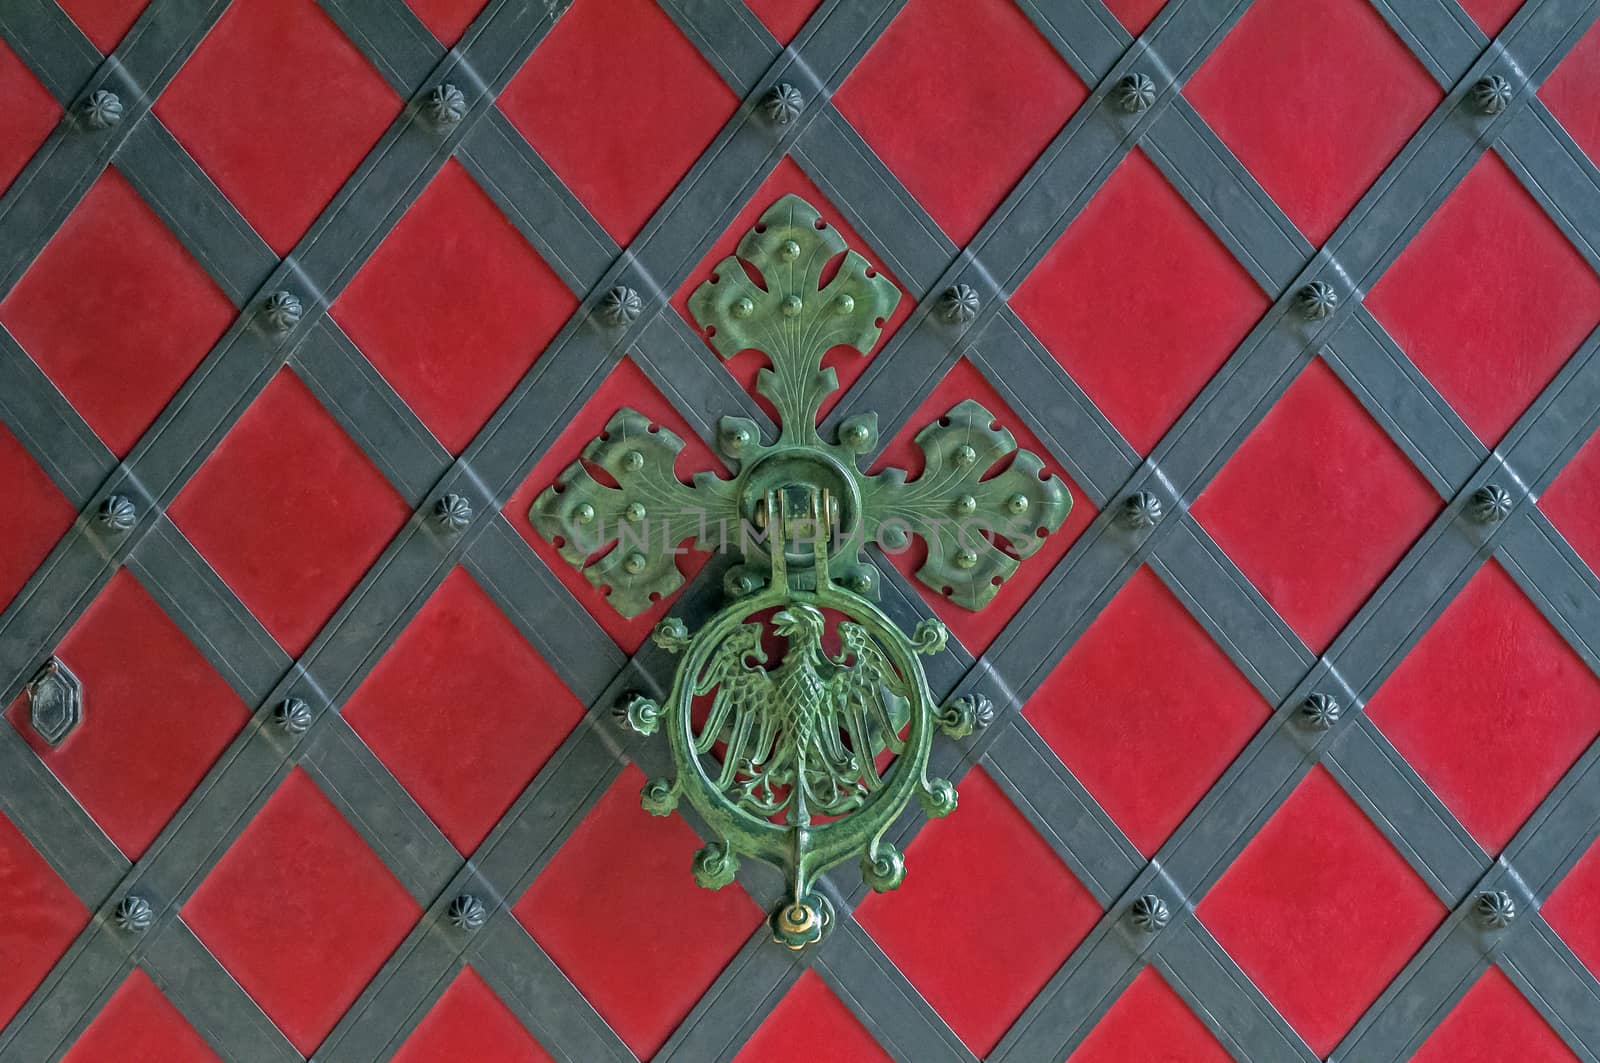 Close up view of an ornamental castle door knocker.